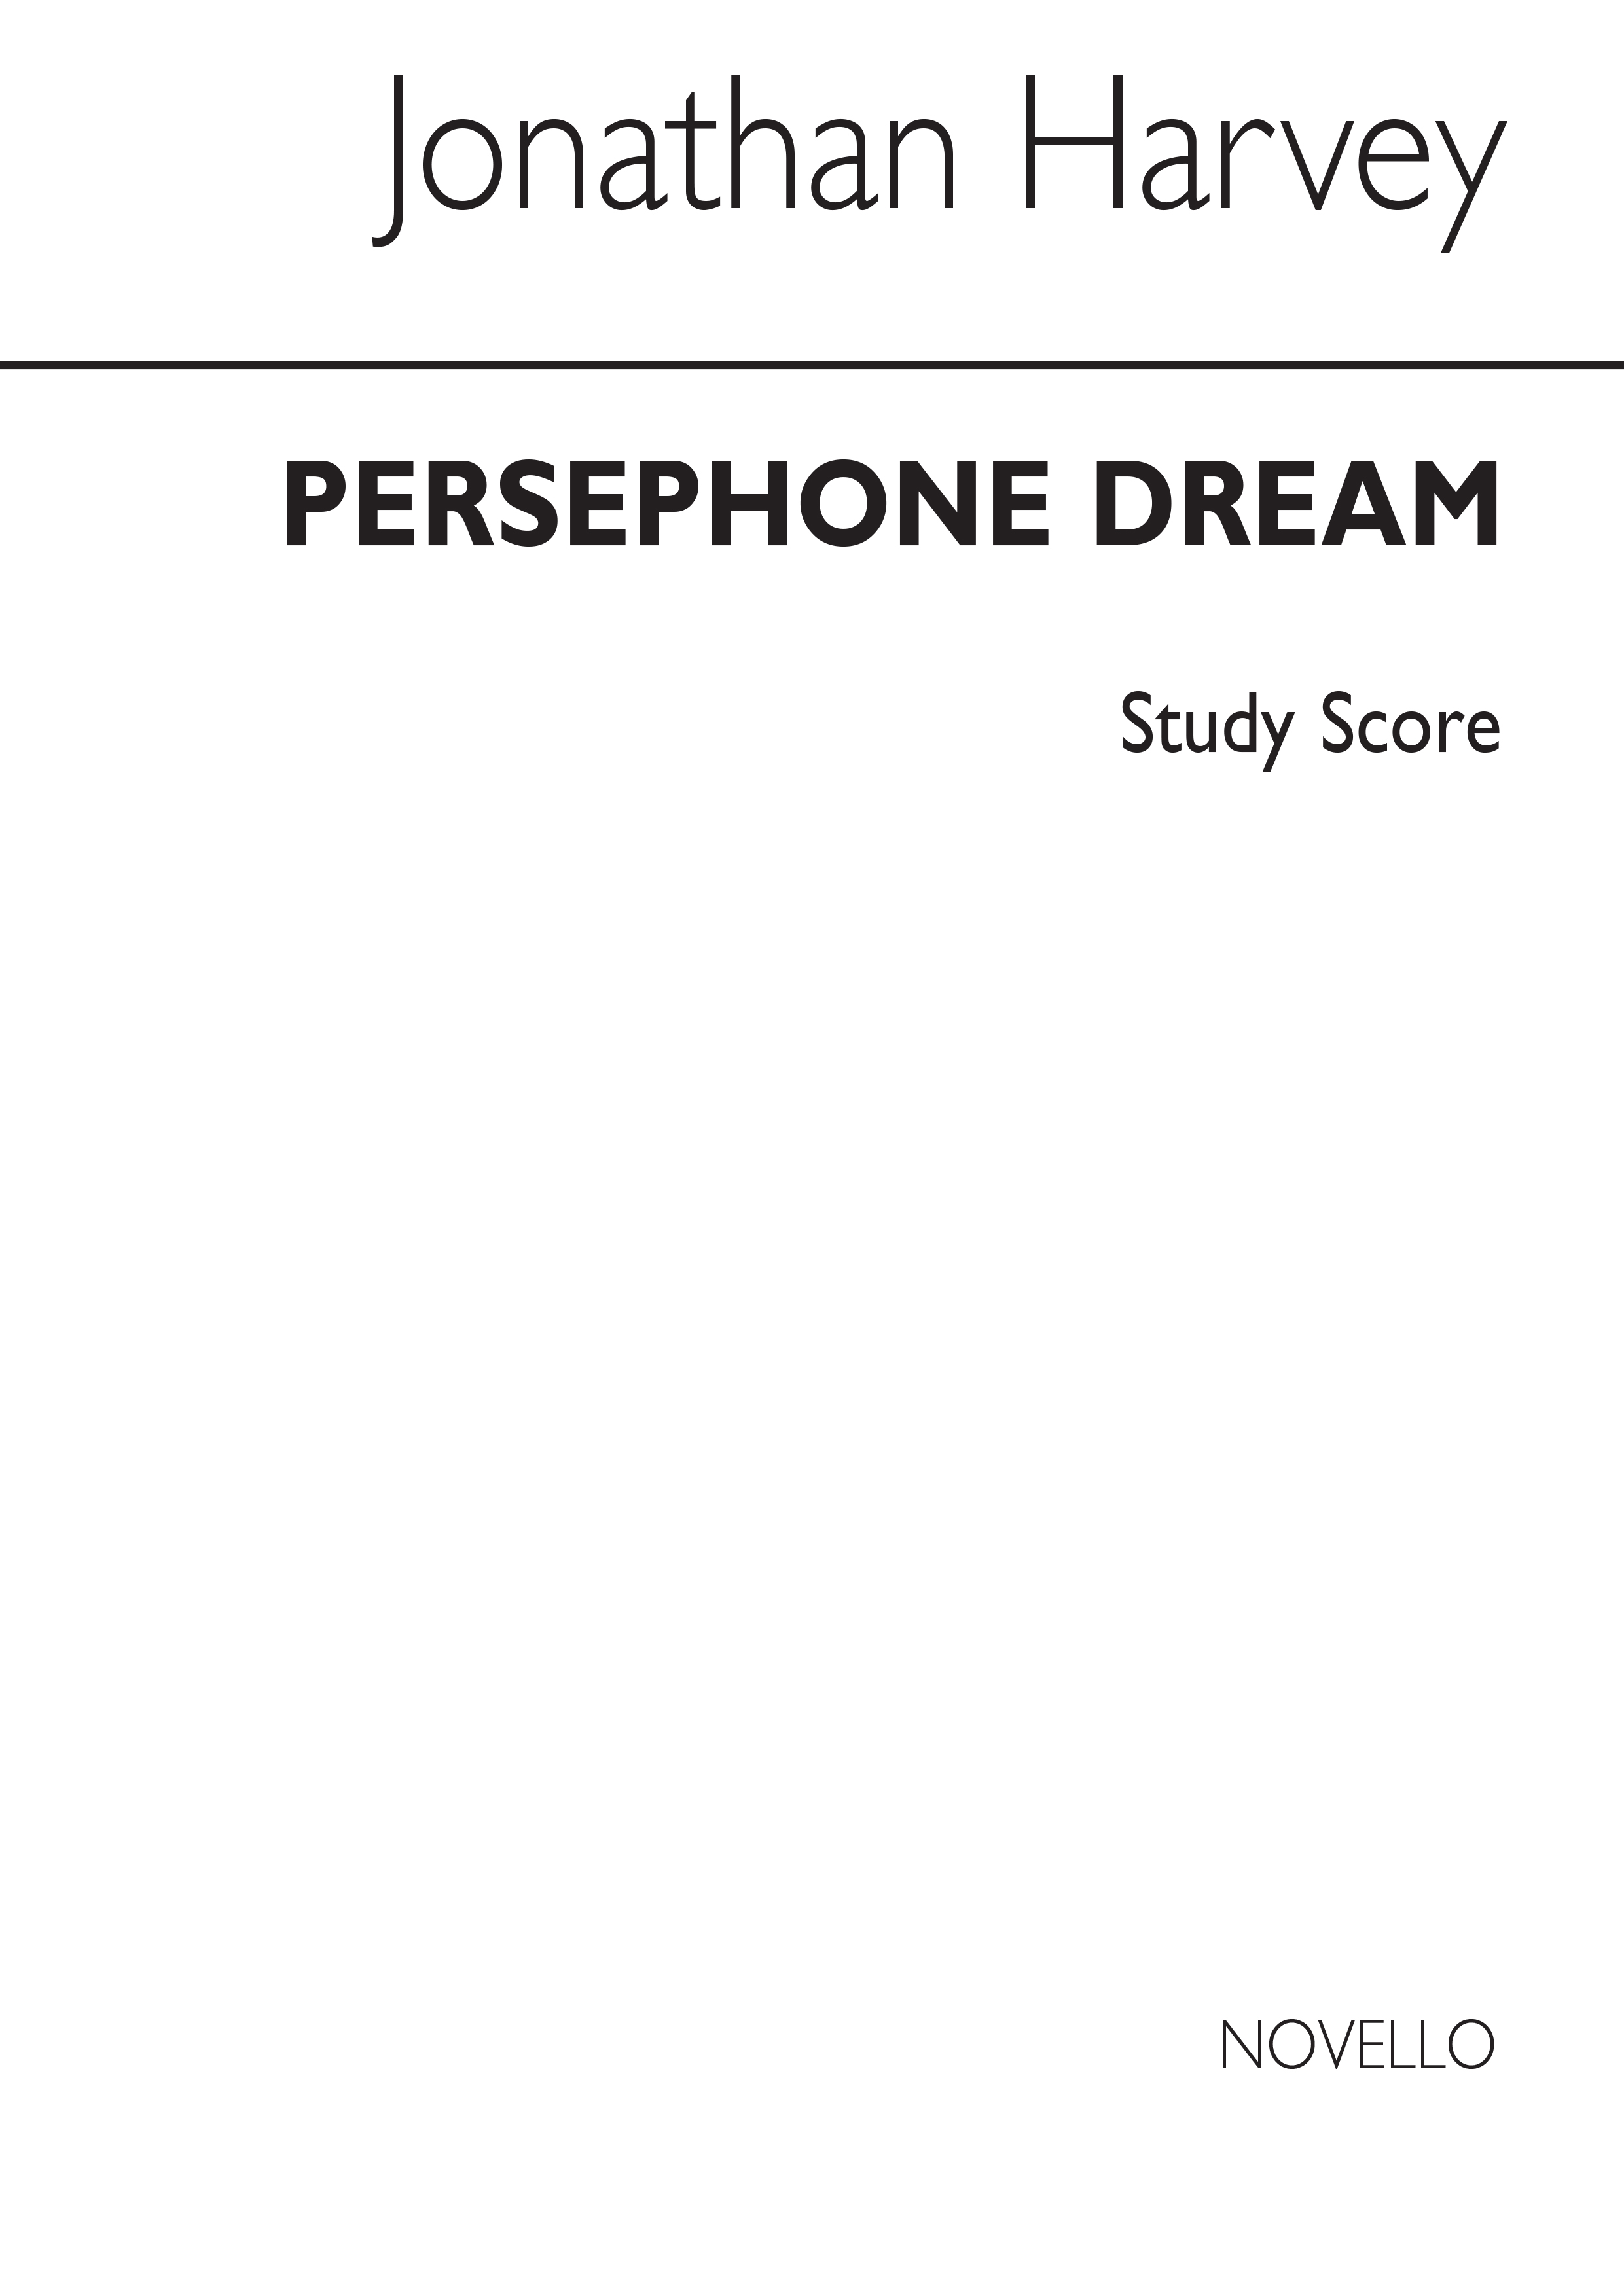 Jonathan Harvey: Persephone Dream (Study Score)